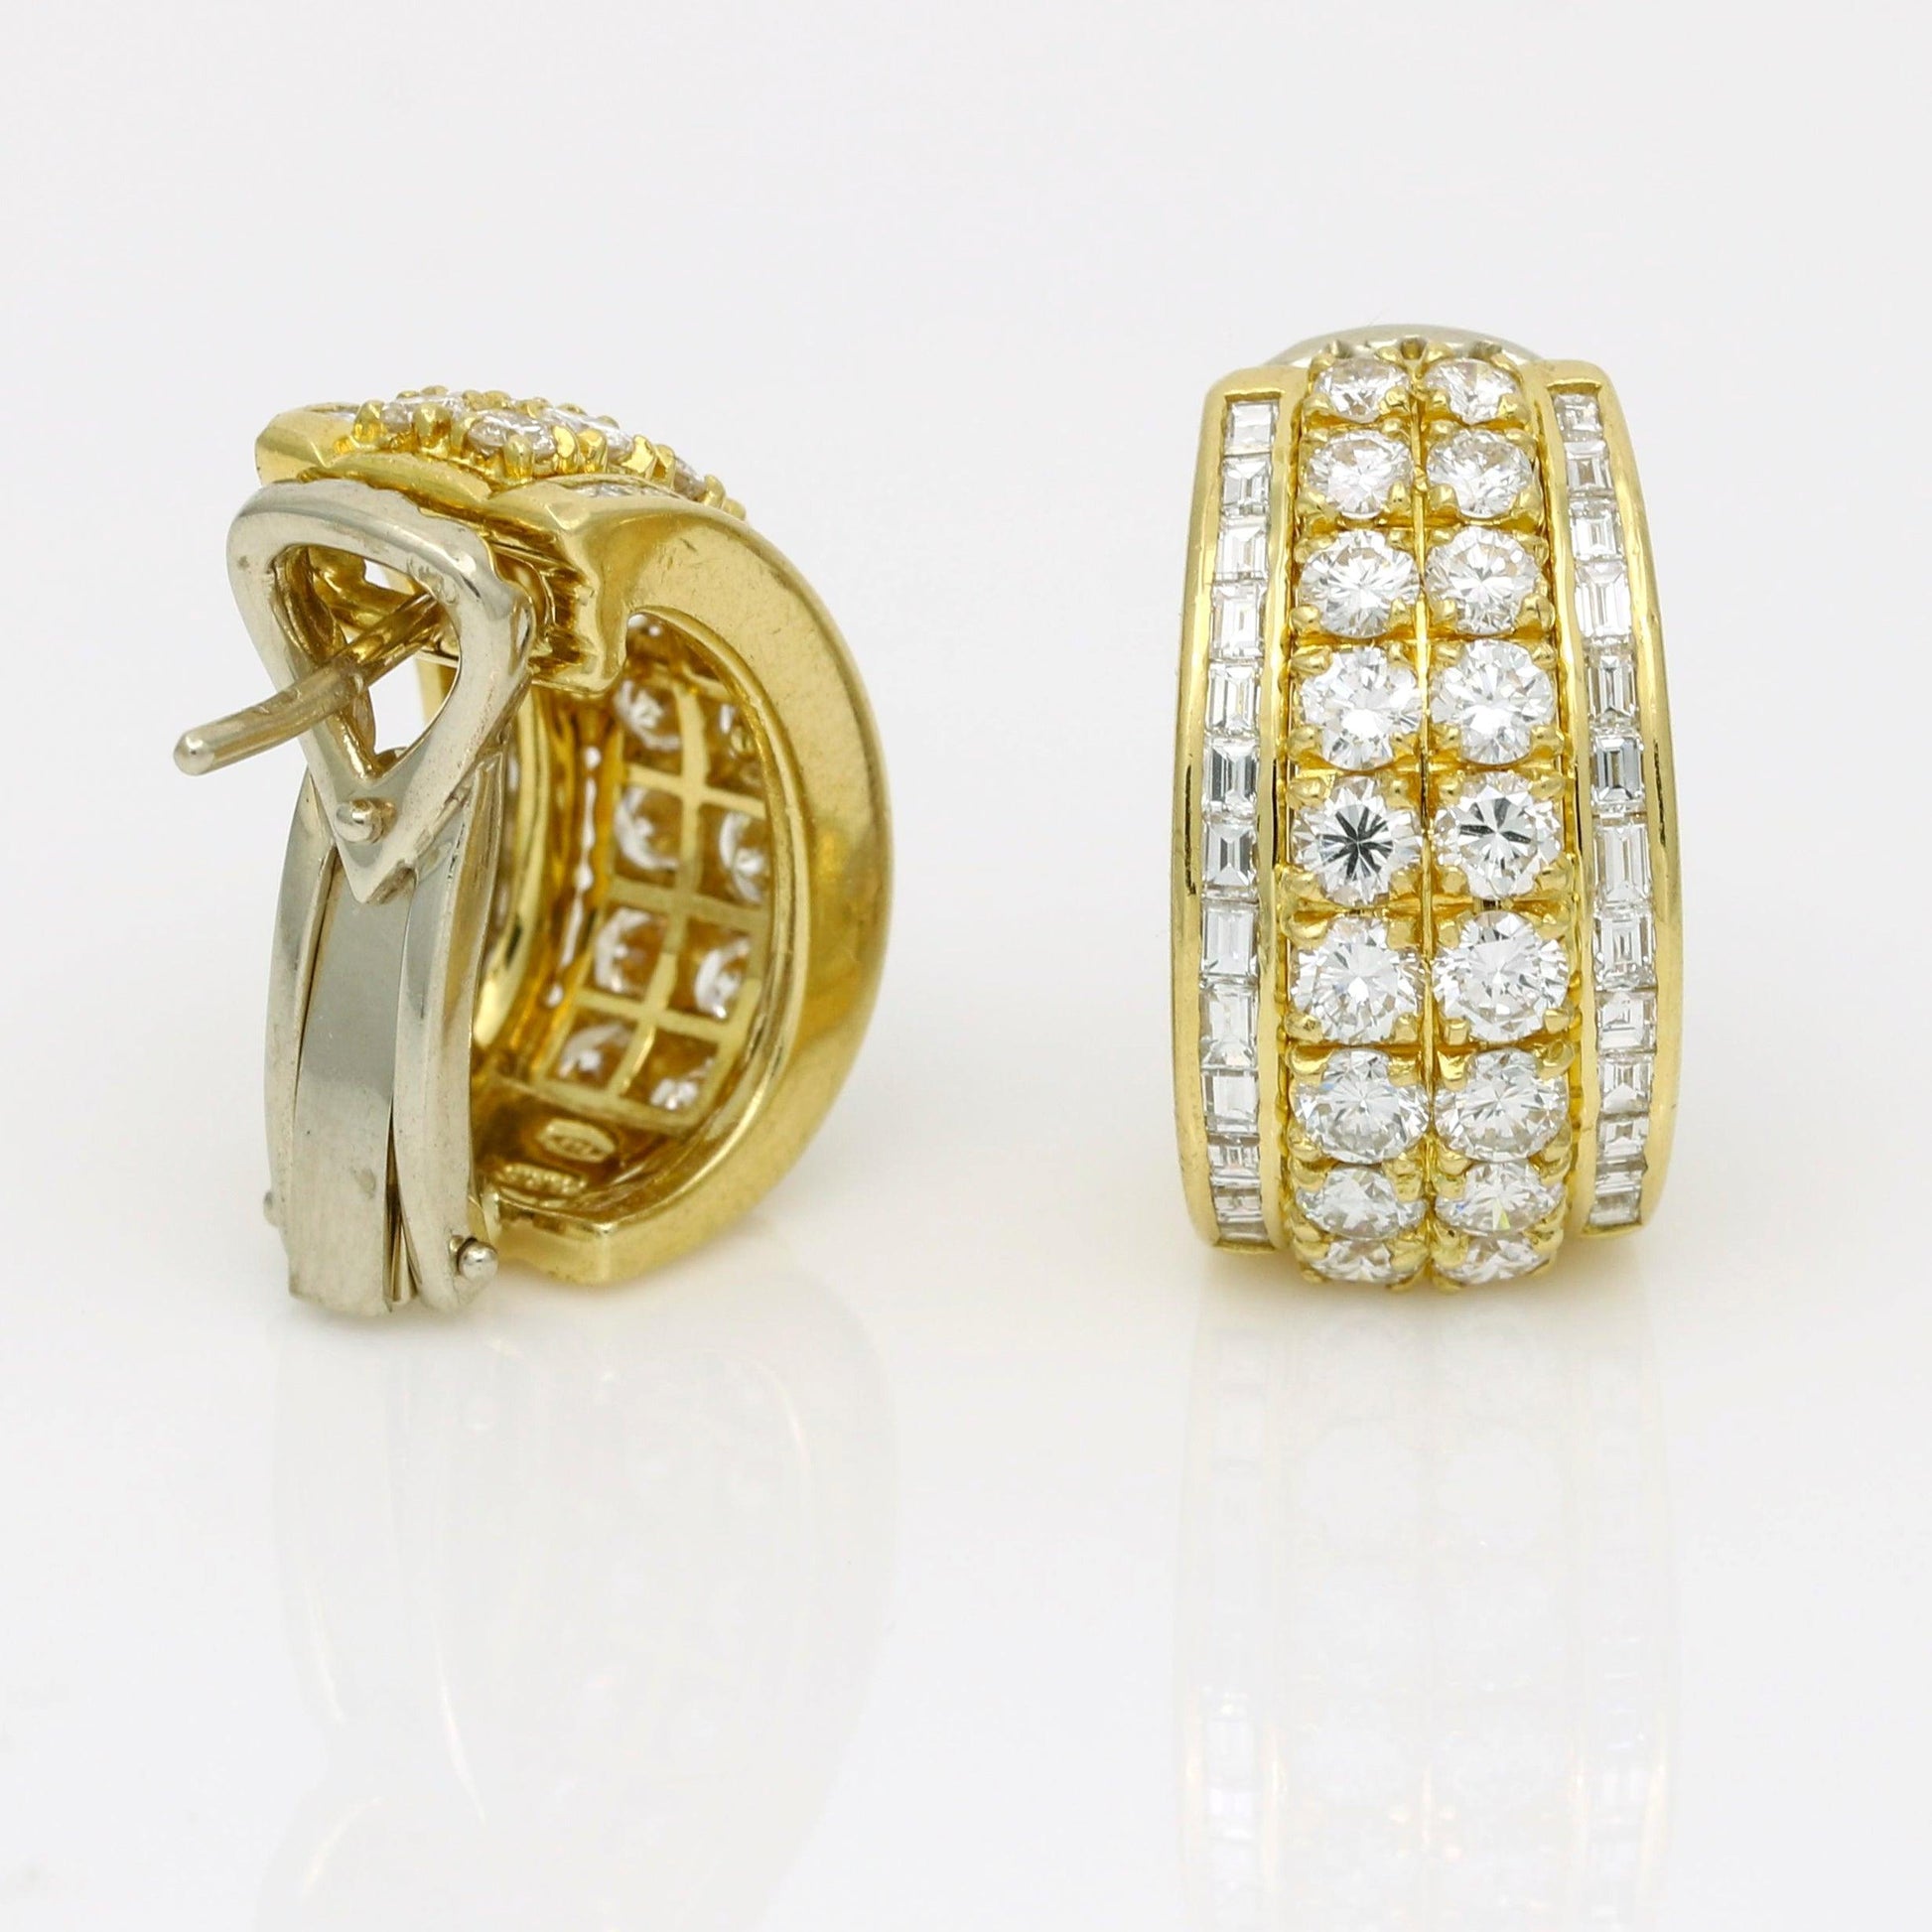 Fred of Paris Diamond C-Shaped Hoop Earrings in 18k Yellow Gold - 31 Jewels Inc.